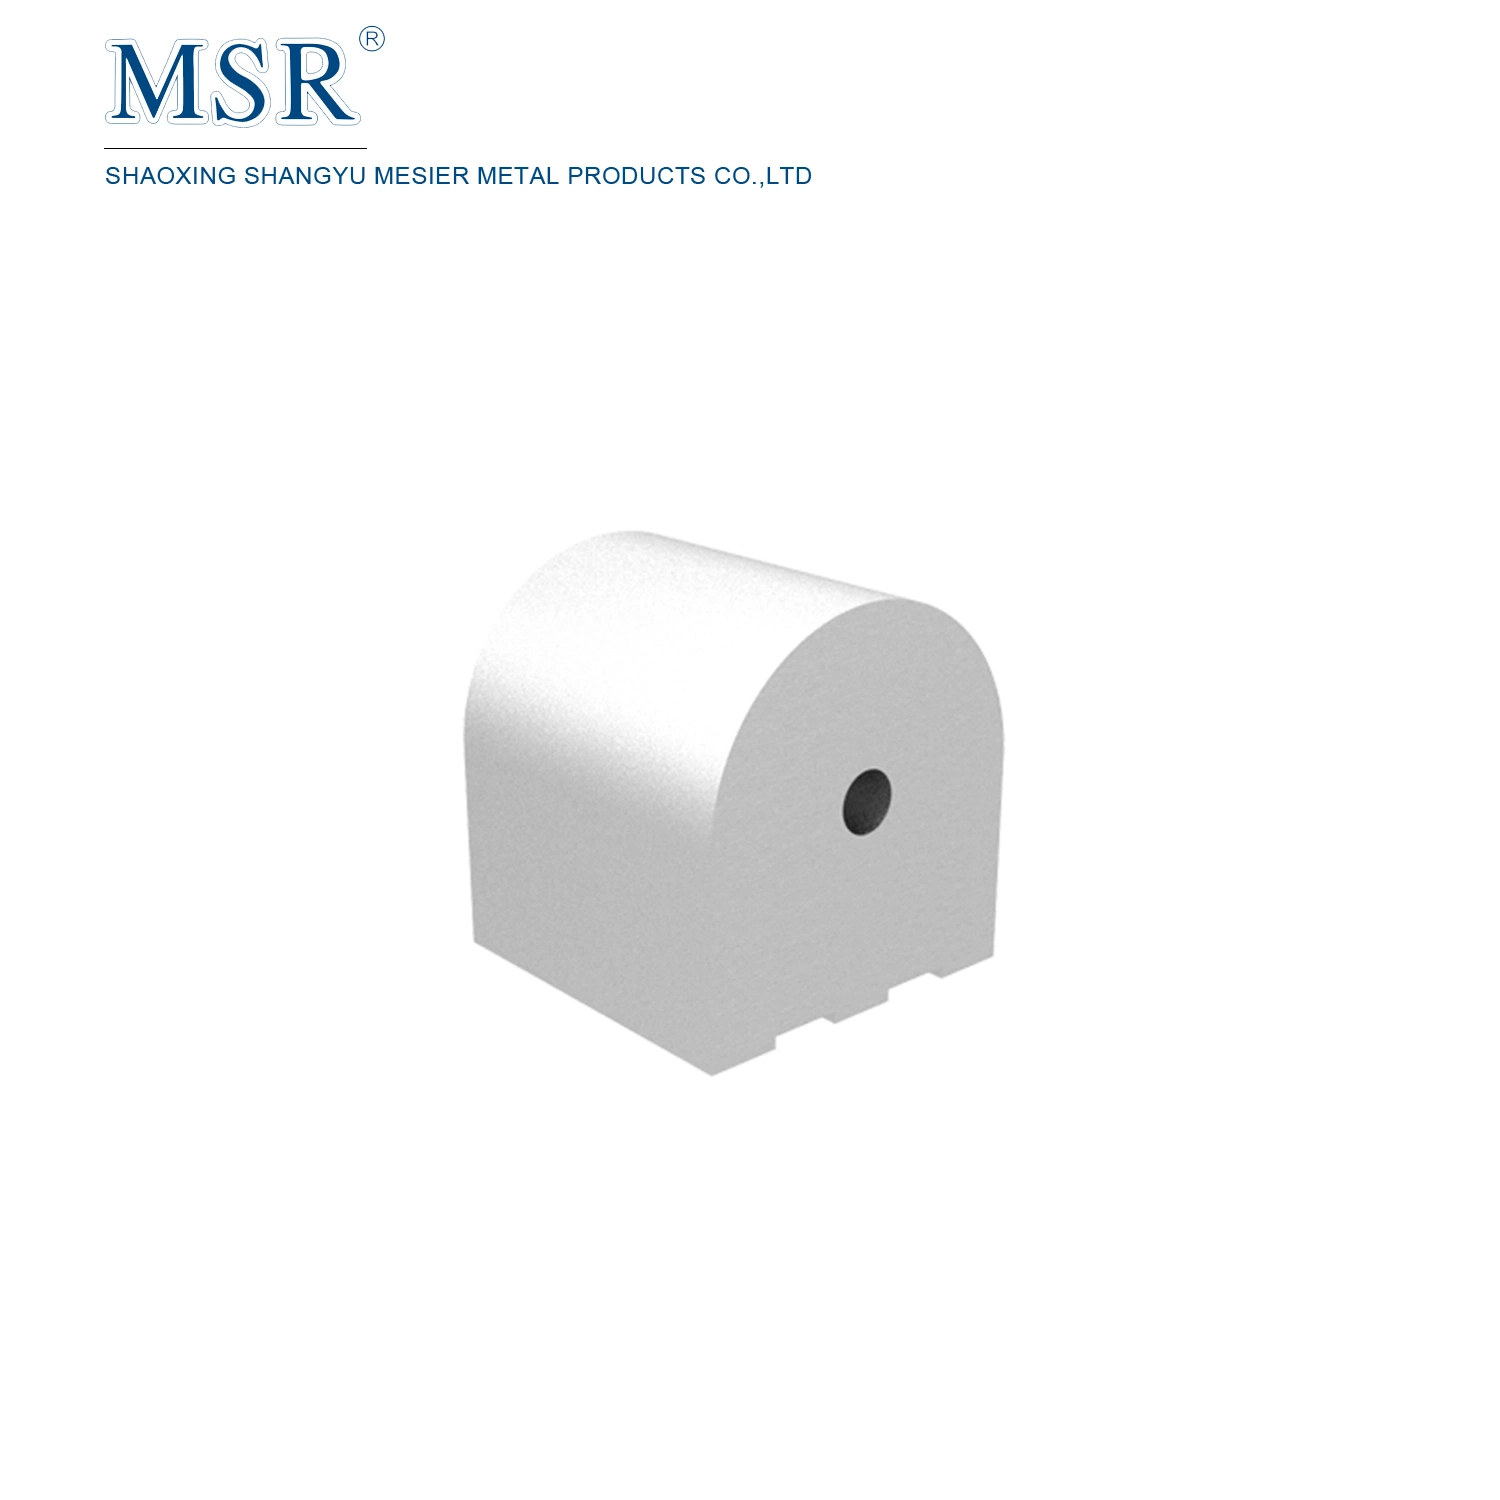 China Manufacturer Msr 9060 Aluminum Profile Aluminum Extruded Tubing Aluminium Extrusion for Moving Joint Parts 30*30mm